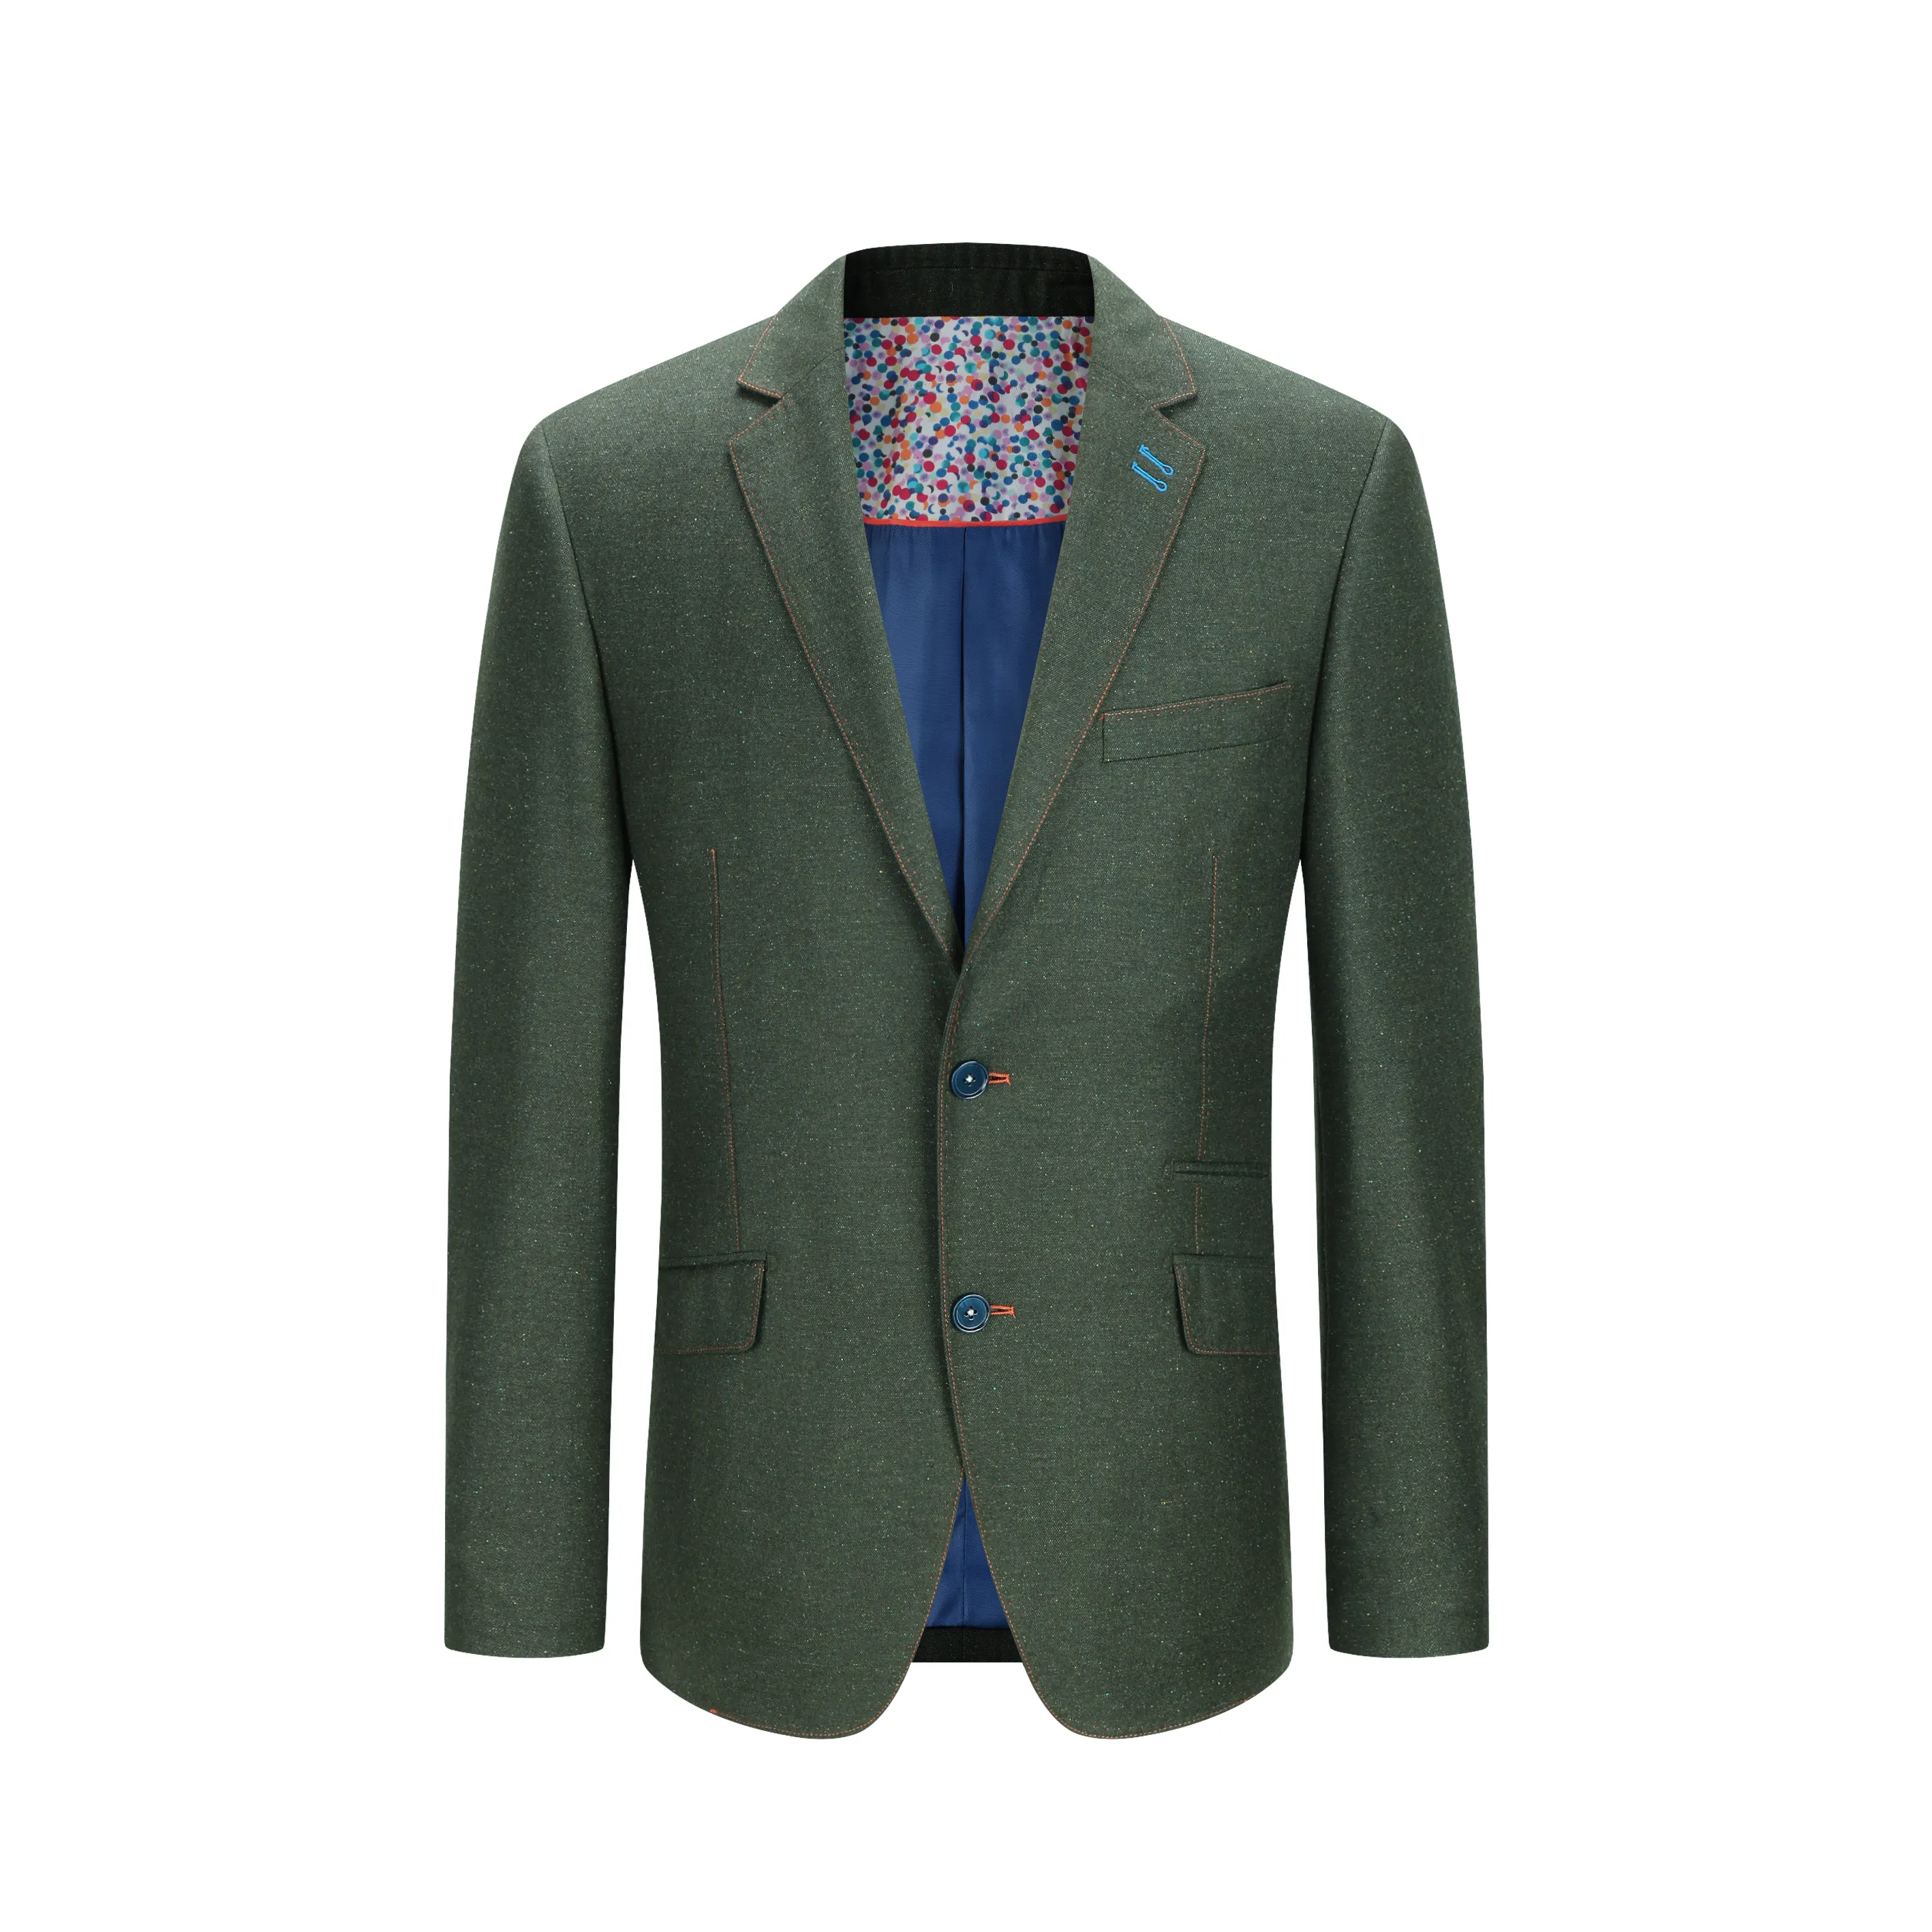 green blazer jacket